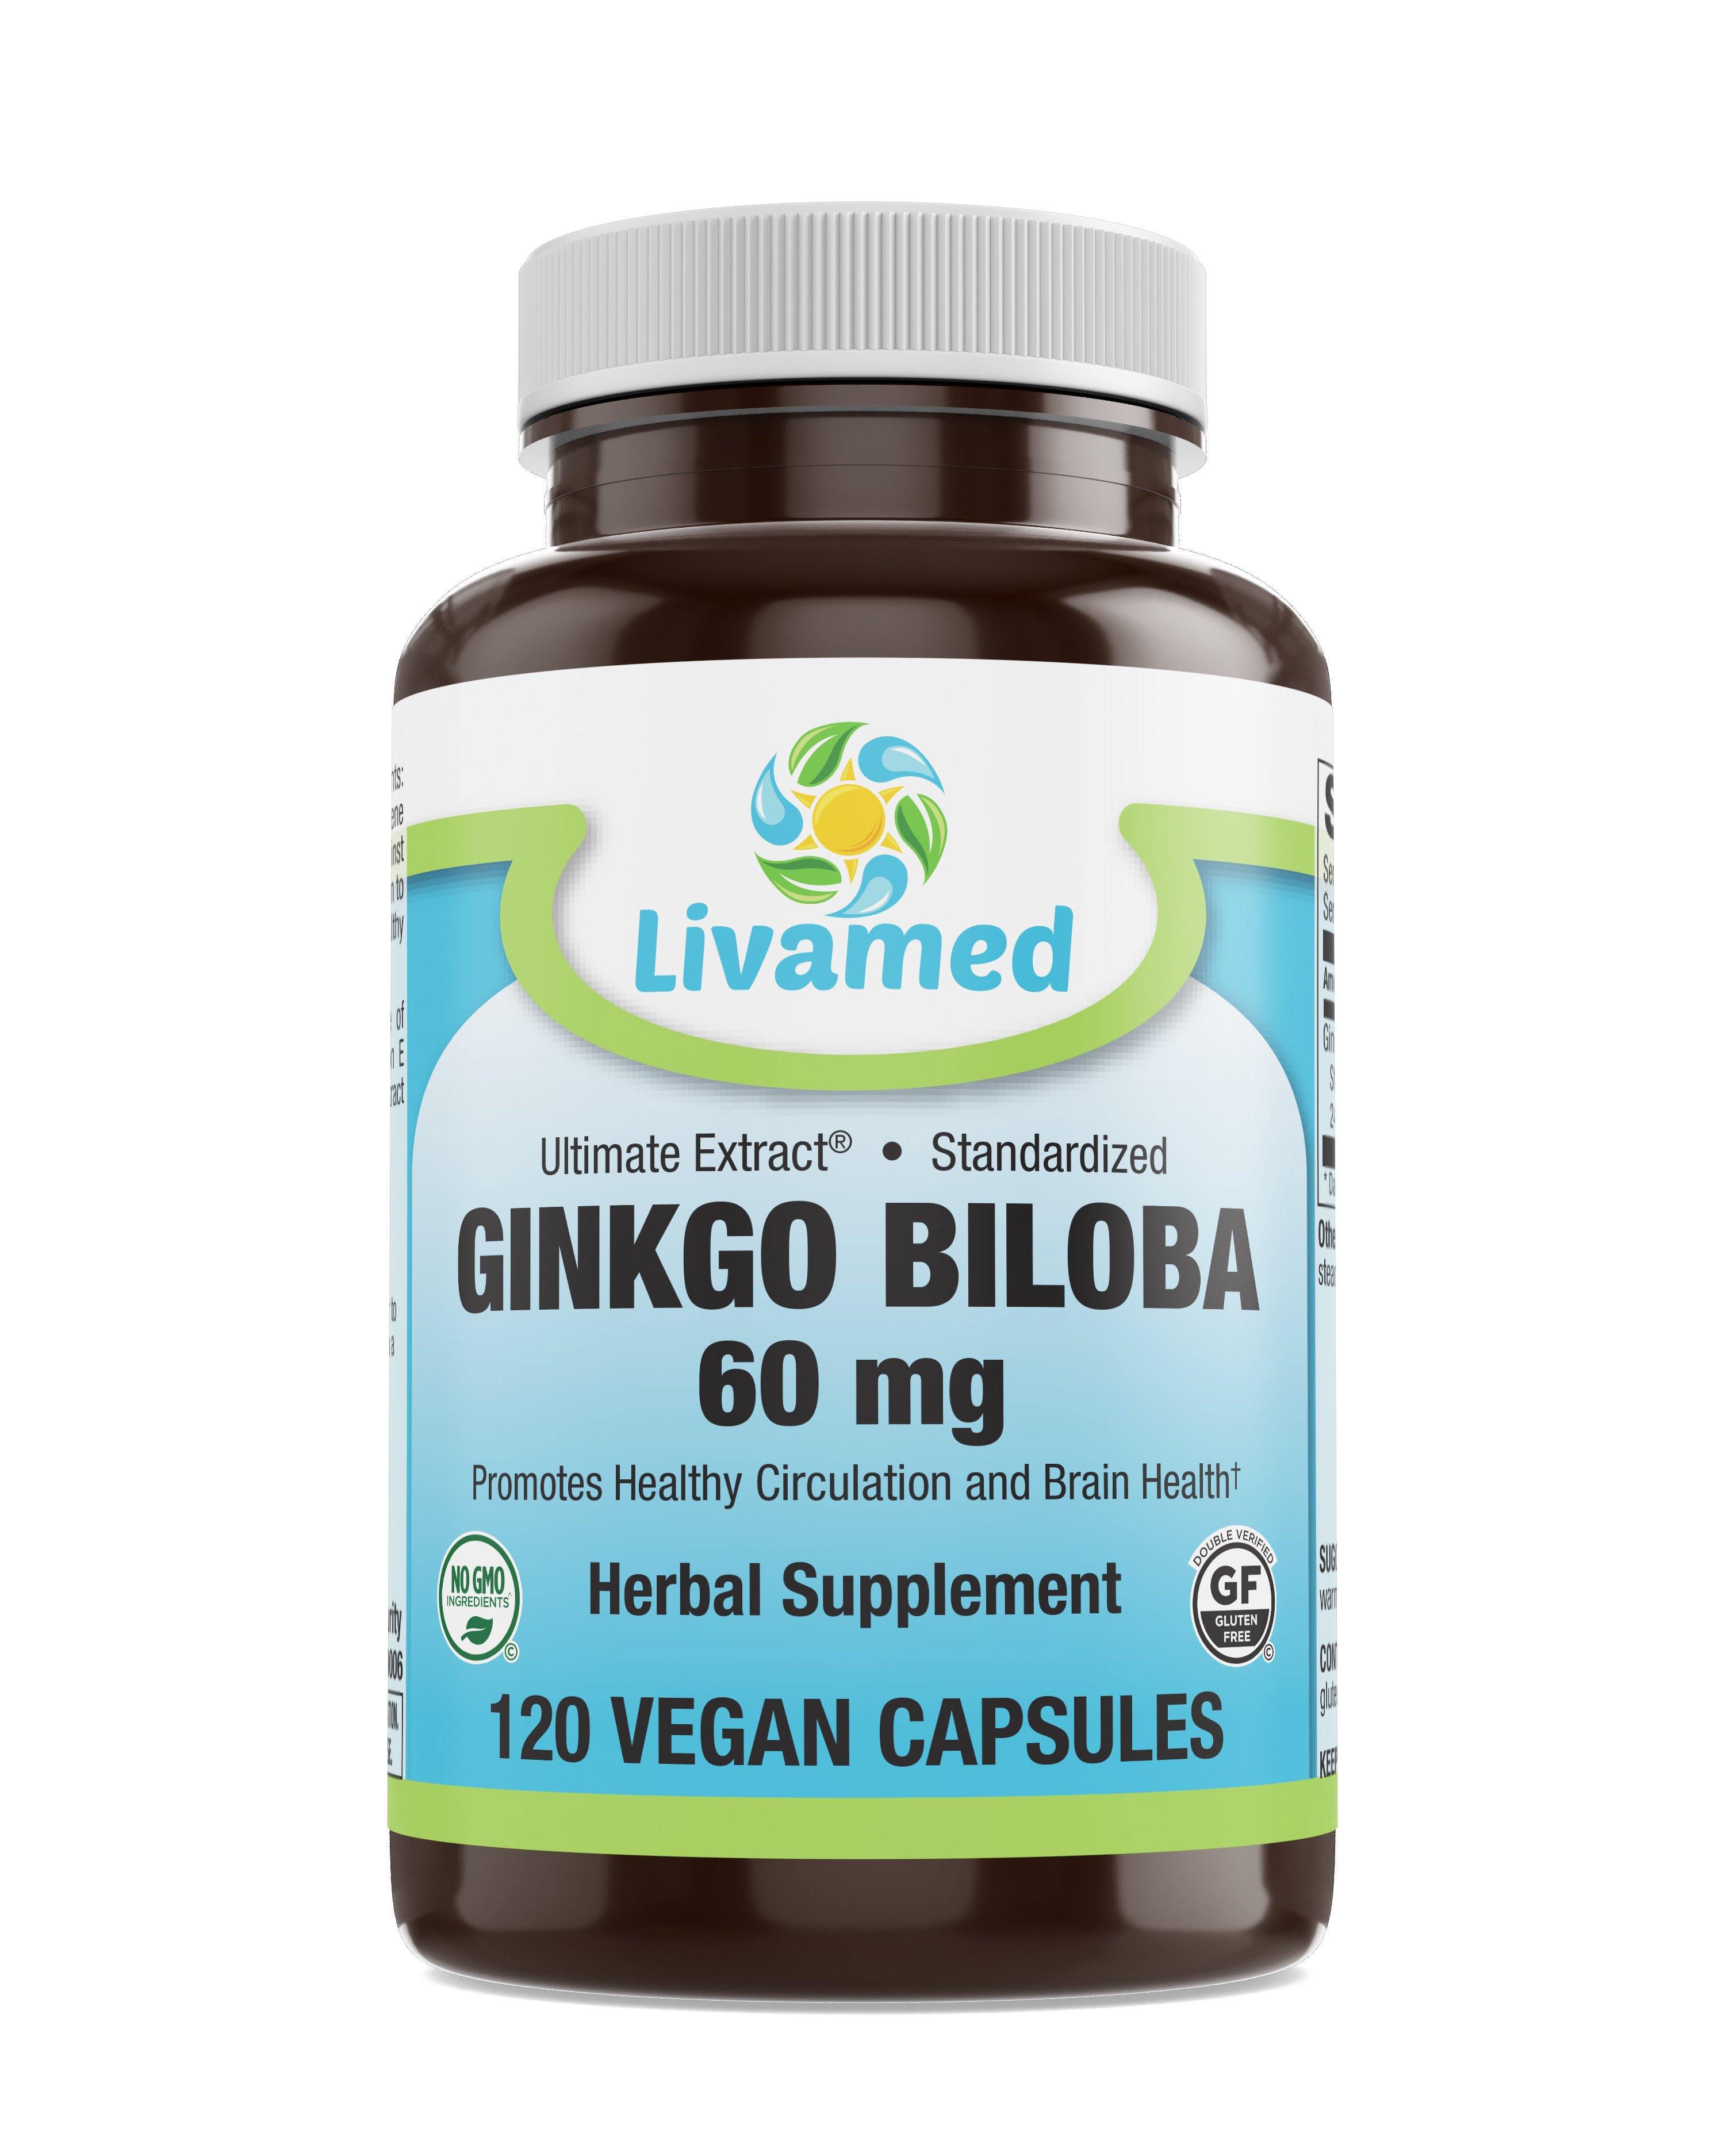 Livamed - Ginkgo Biloba 60 mg Veg Caps 120 Count - Livamed Vitamins